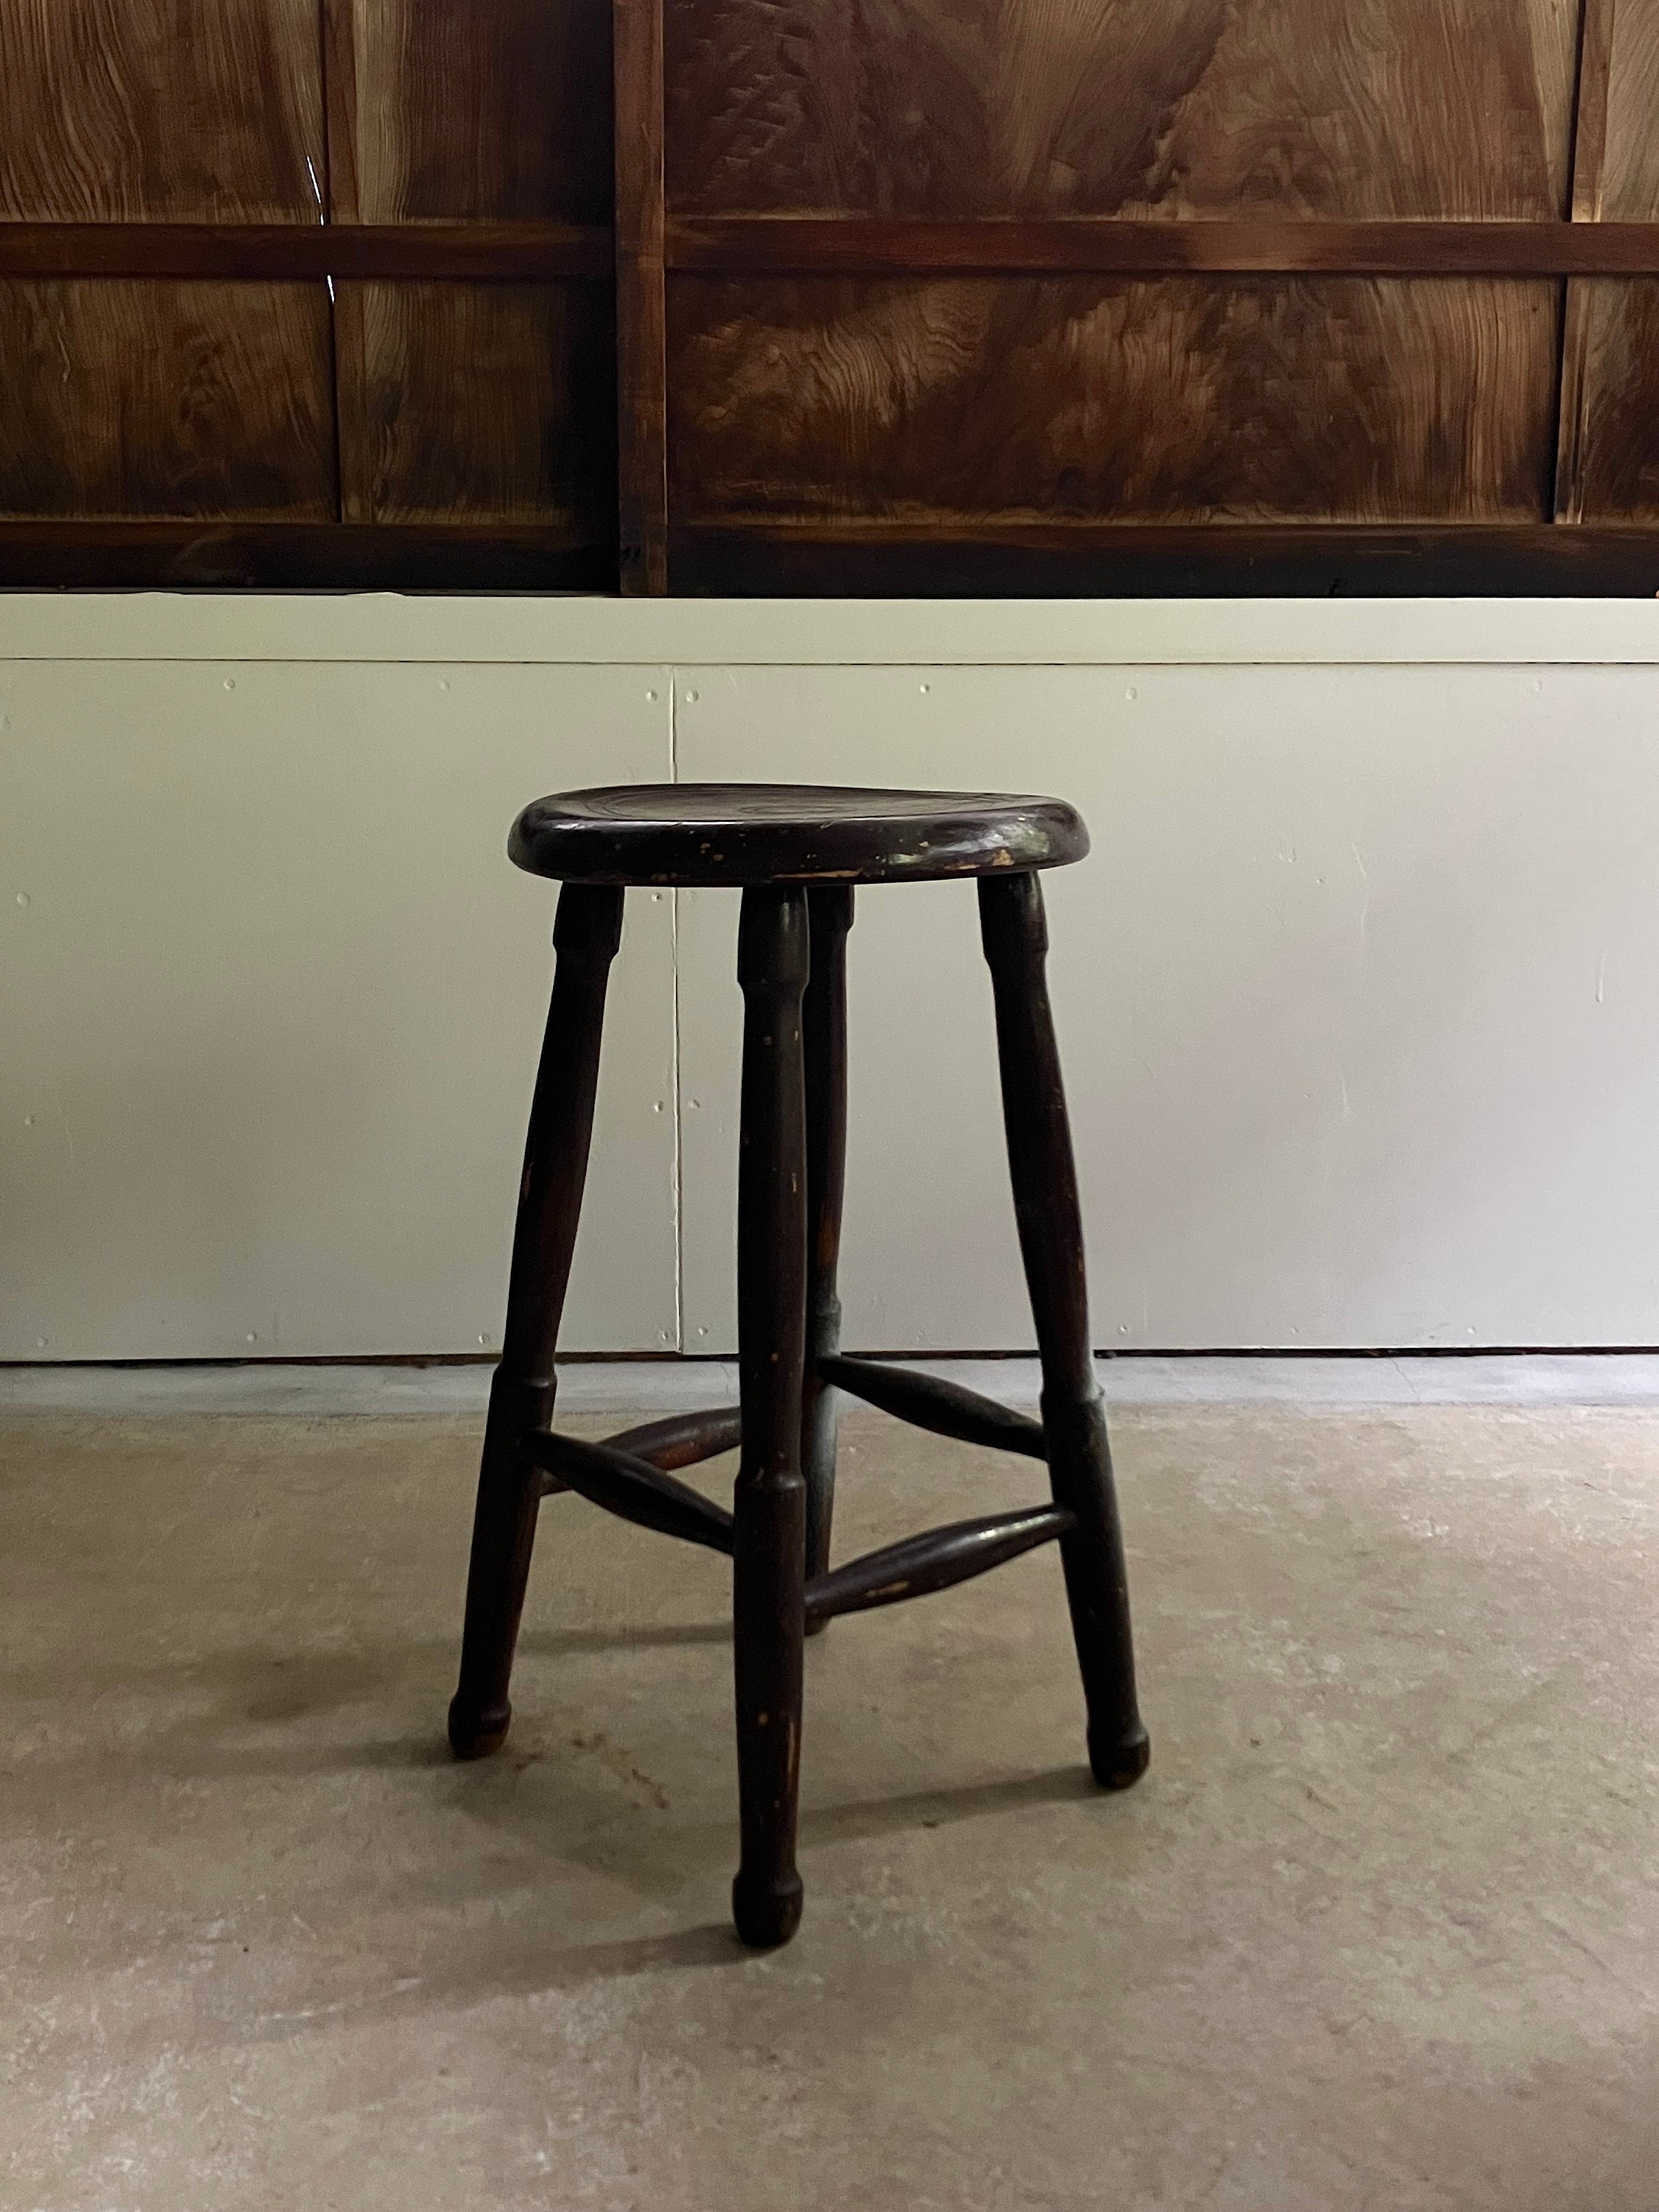 丸椅子 / round stool /  antique paint